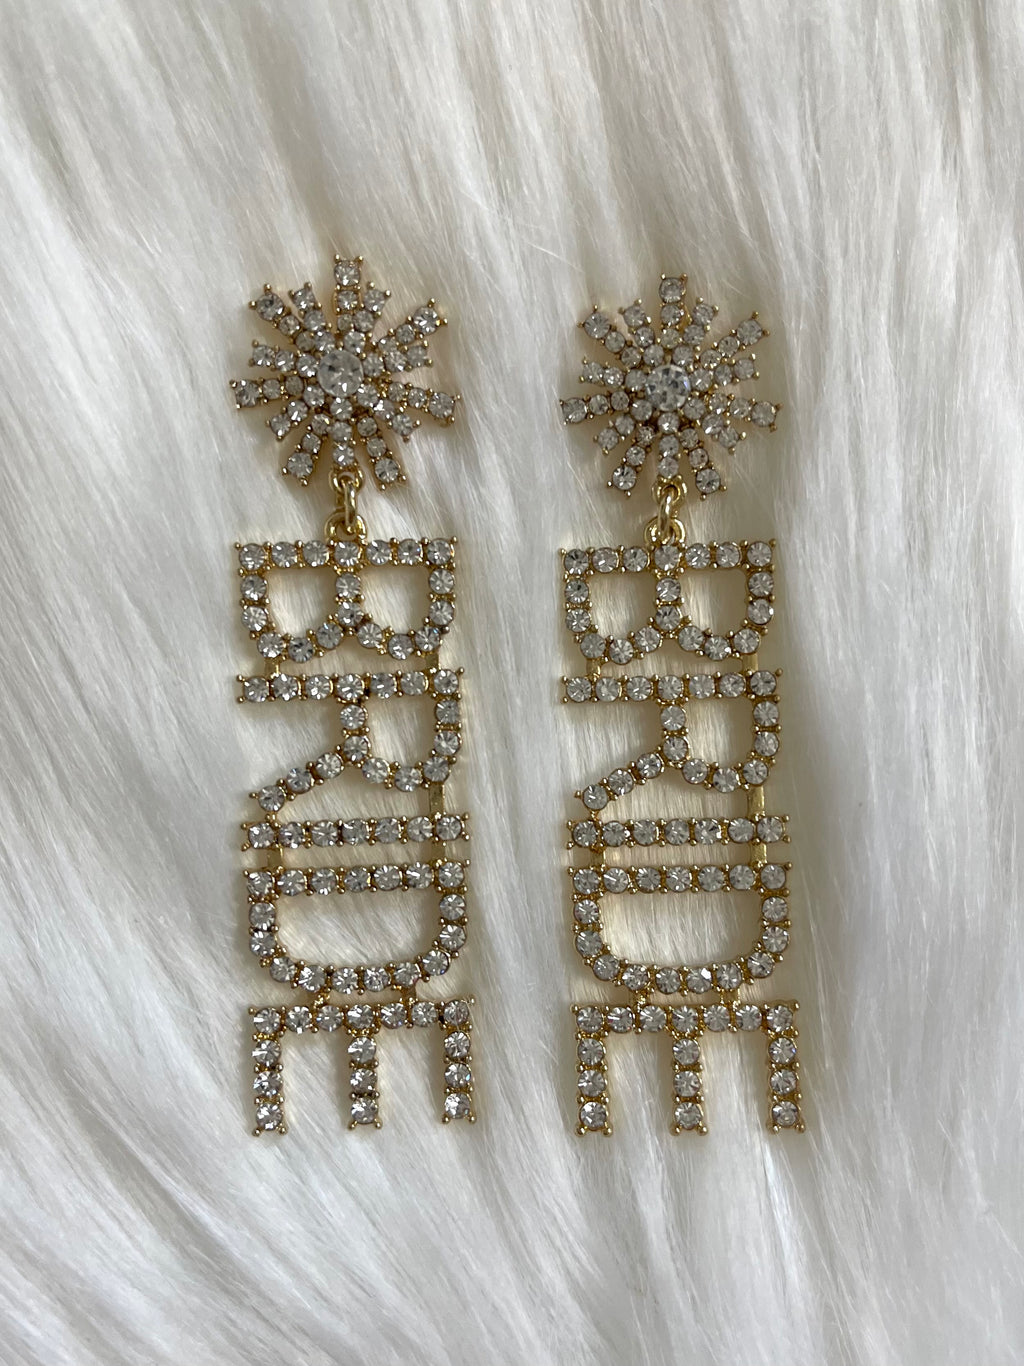 Clear Rhinestone Bride Earrings Gold